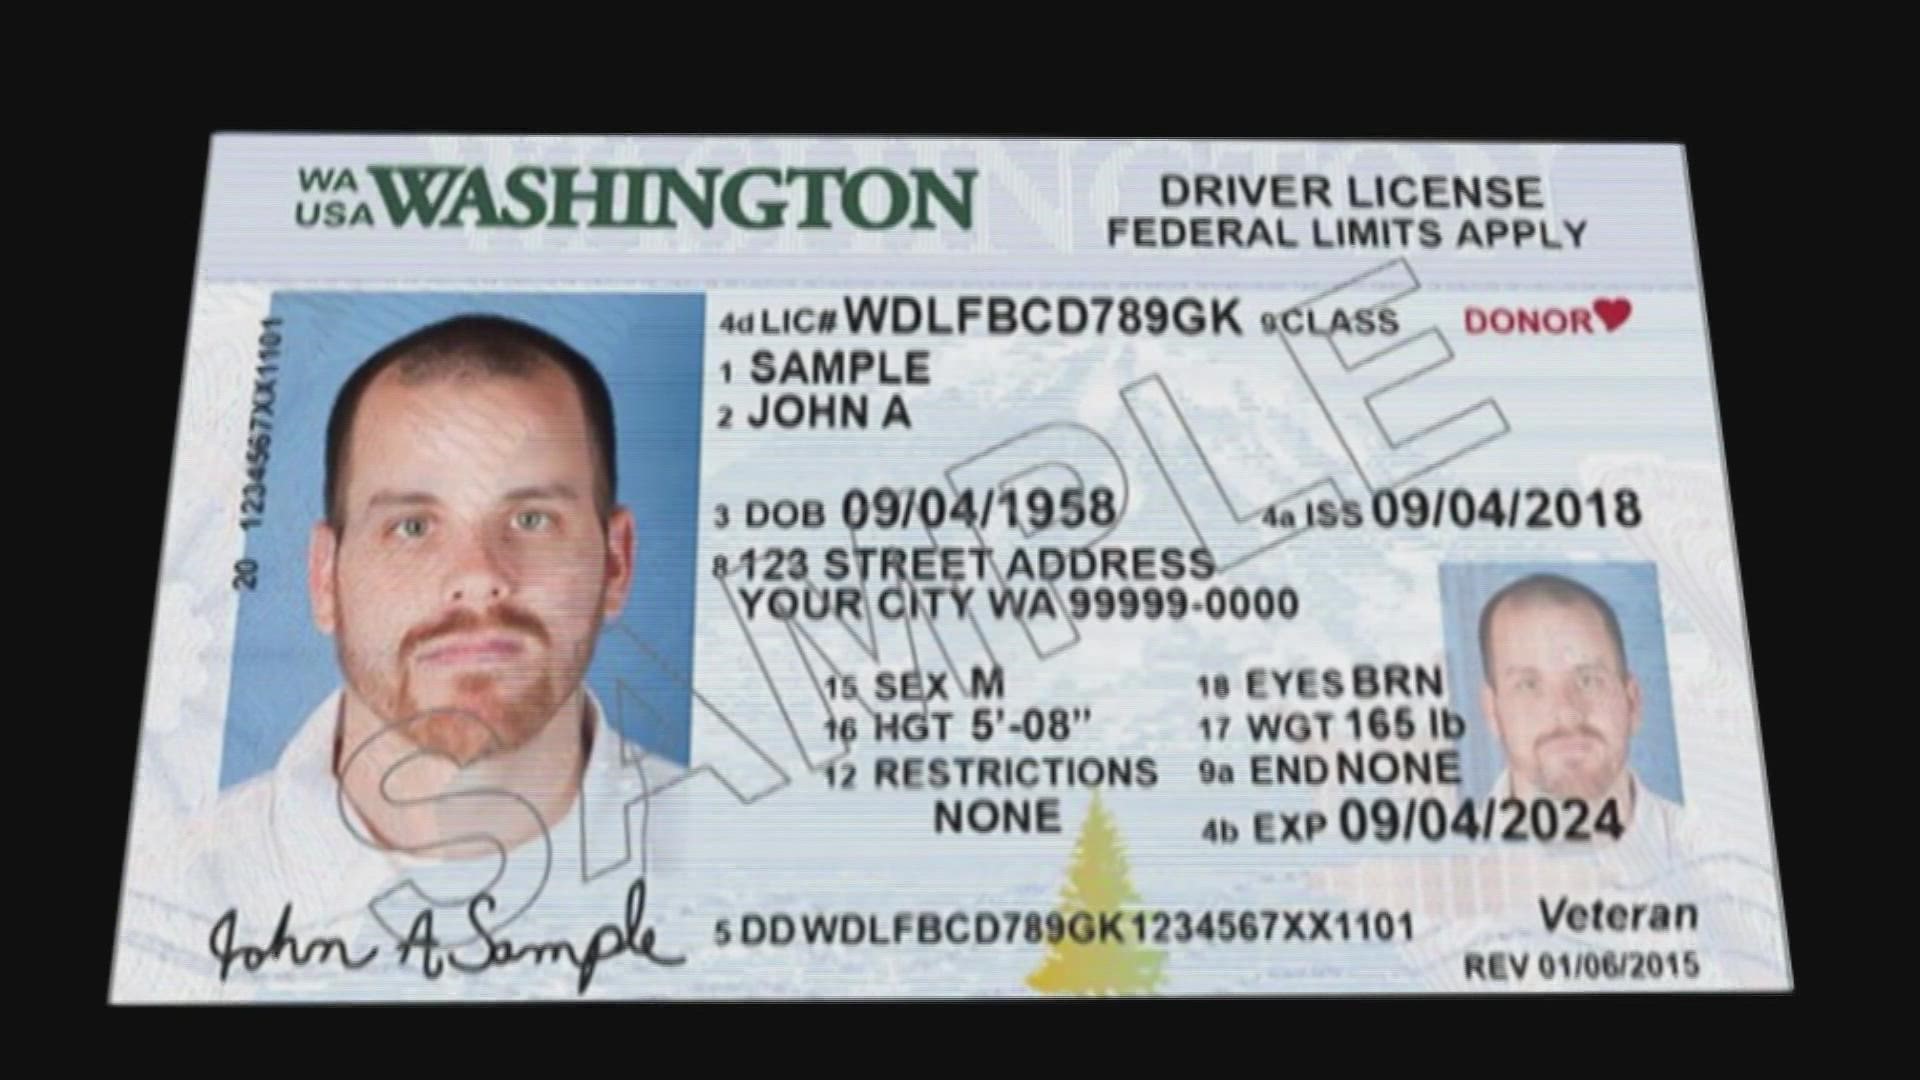 renew my washington state driver's license